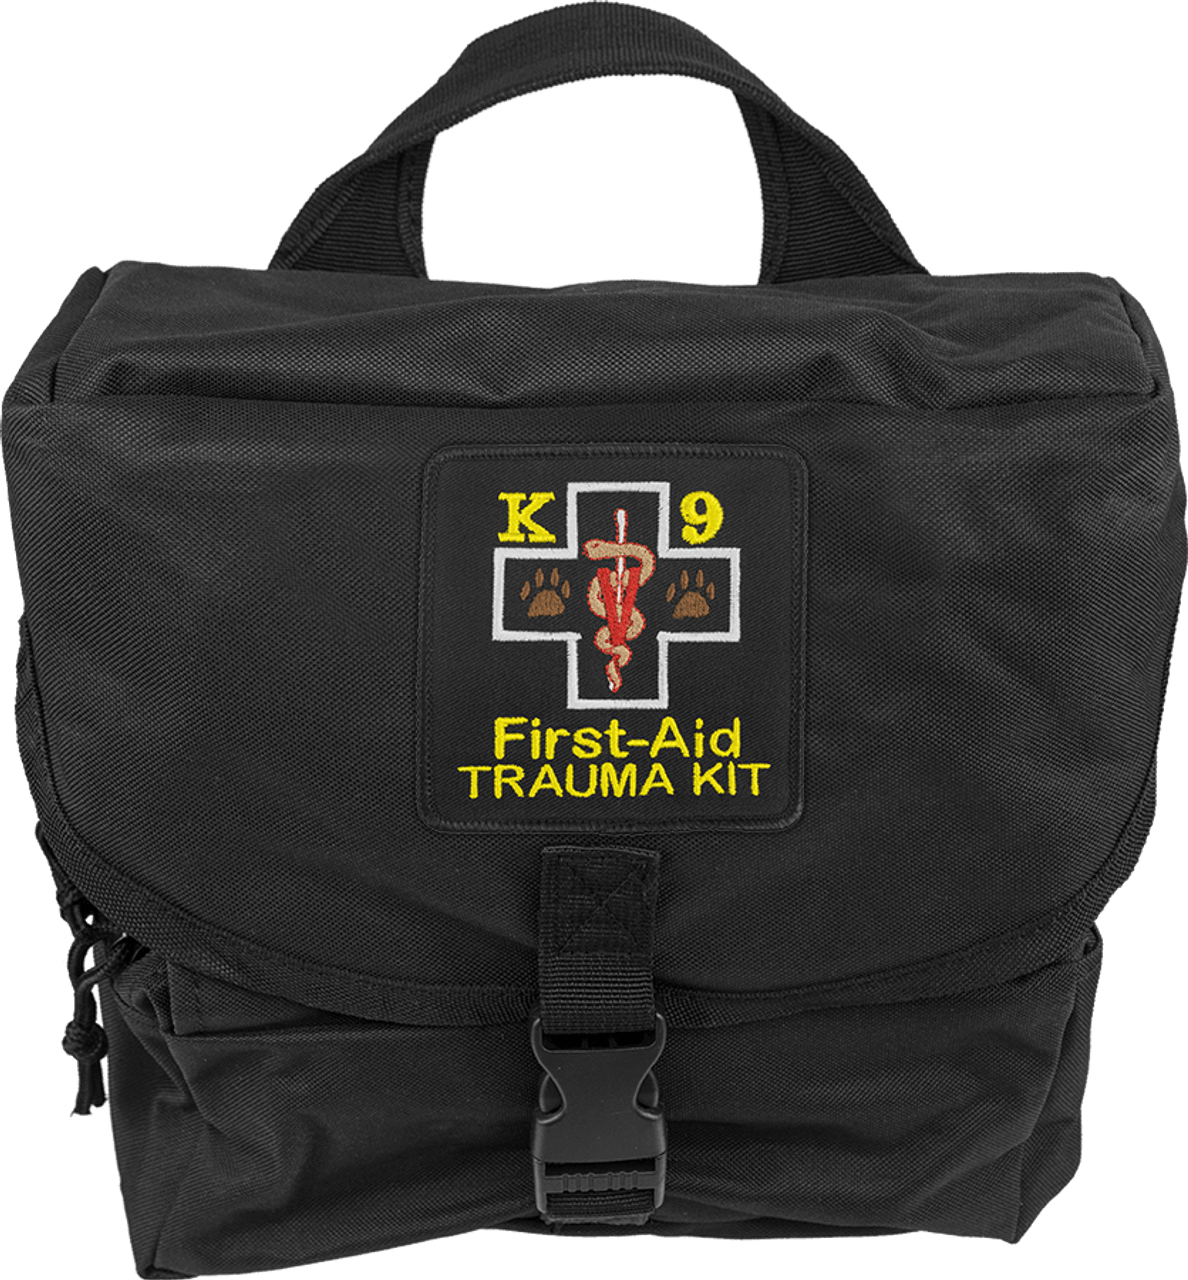 Field First-Aid Emergency & Trauma Kit